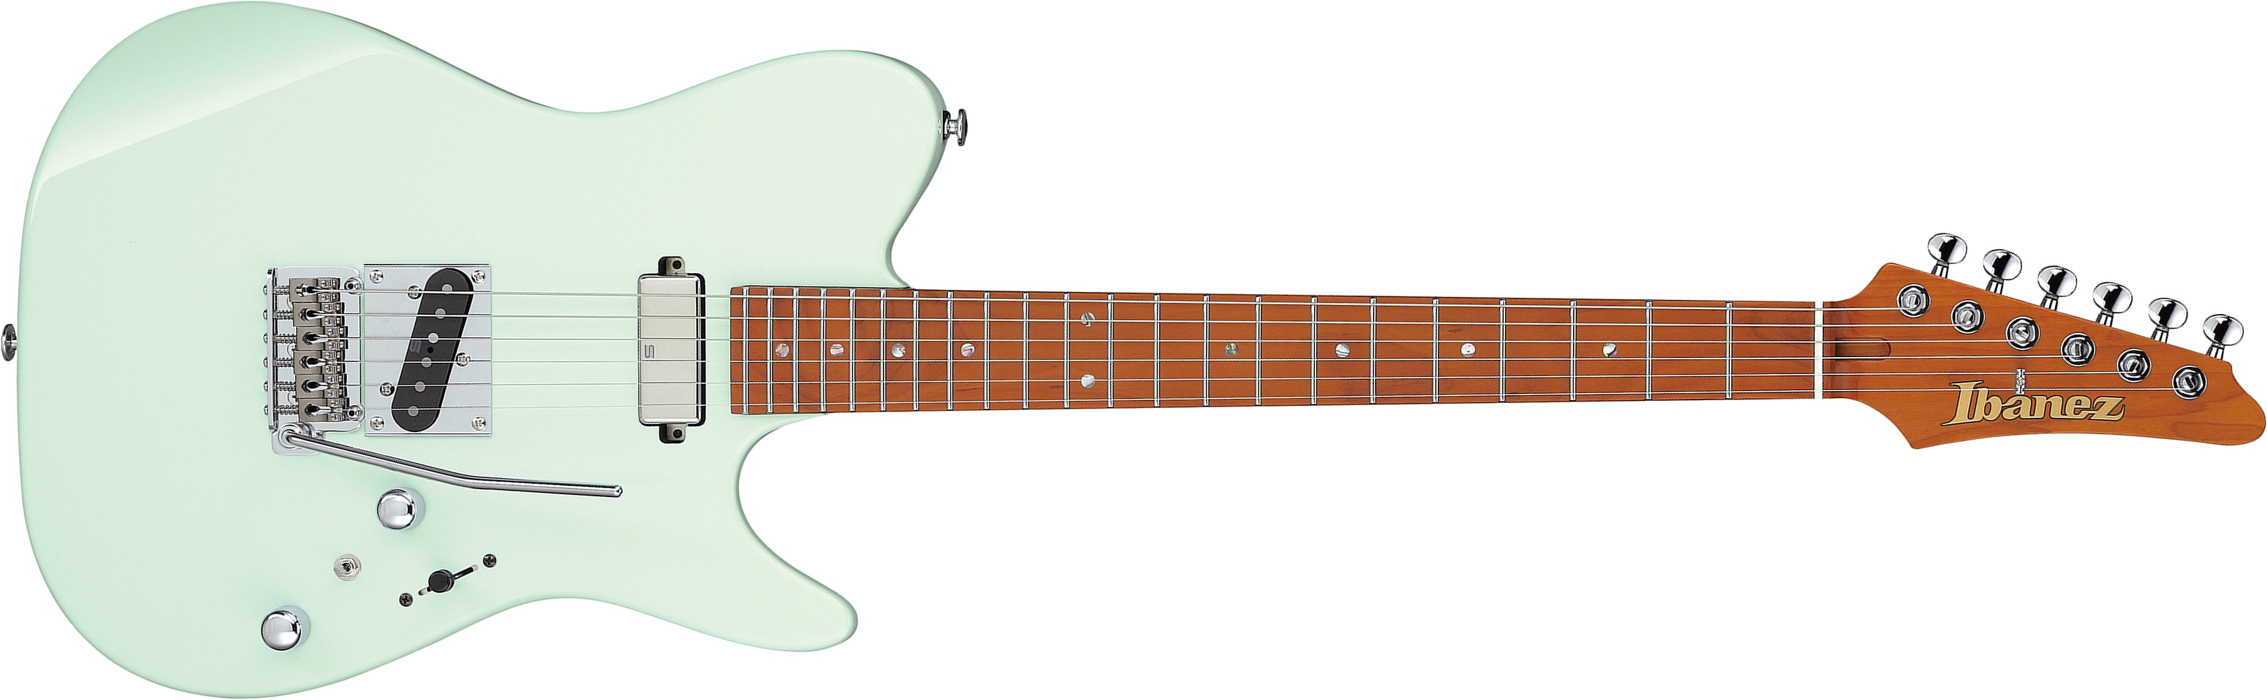 Ibanez Azs2200 Mgr Prestige Jap Smh Seymour Duncan Trem Mn - Mint Green - Televorm elektrische gitaar - Main picture